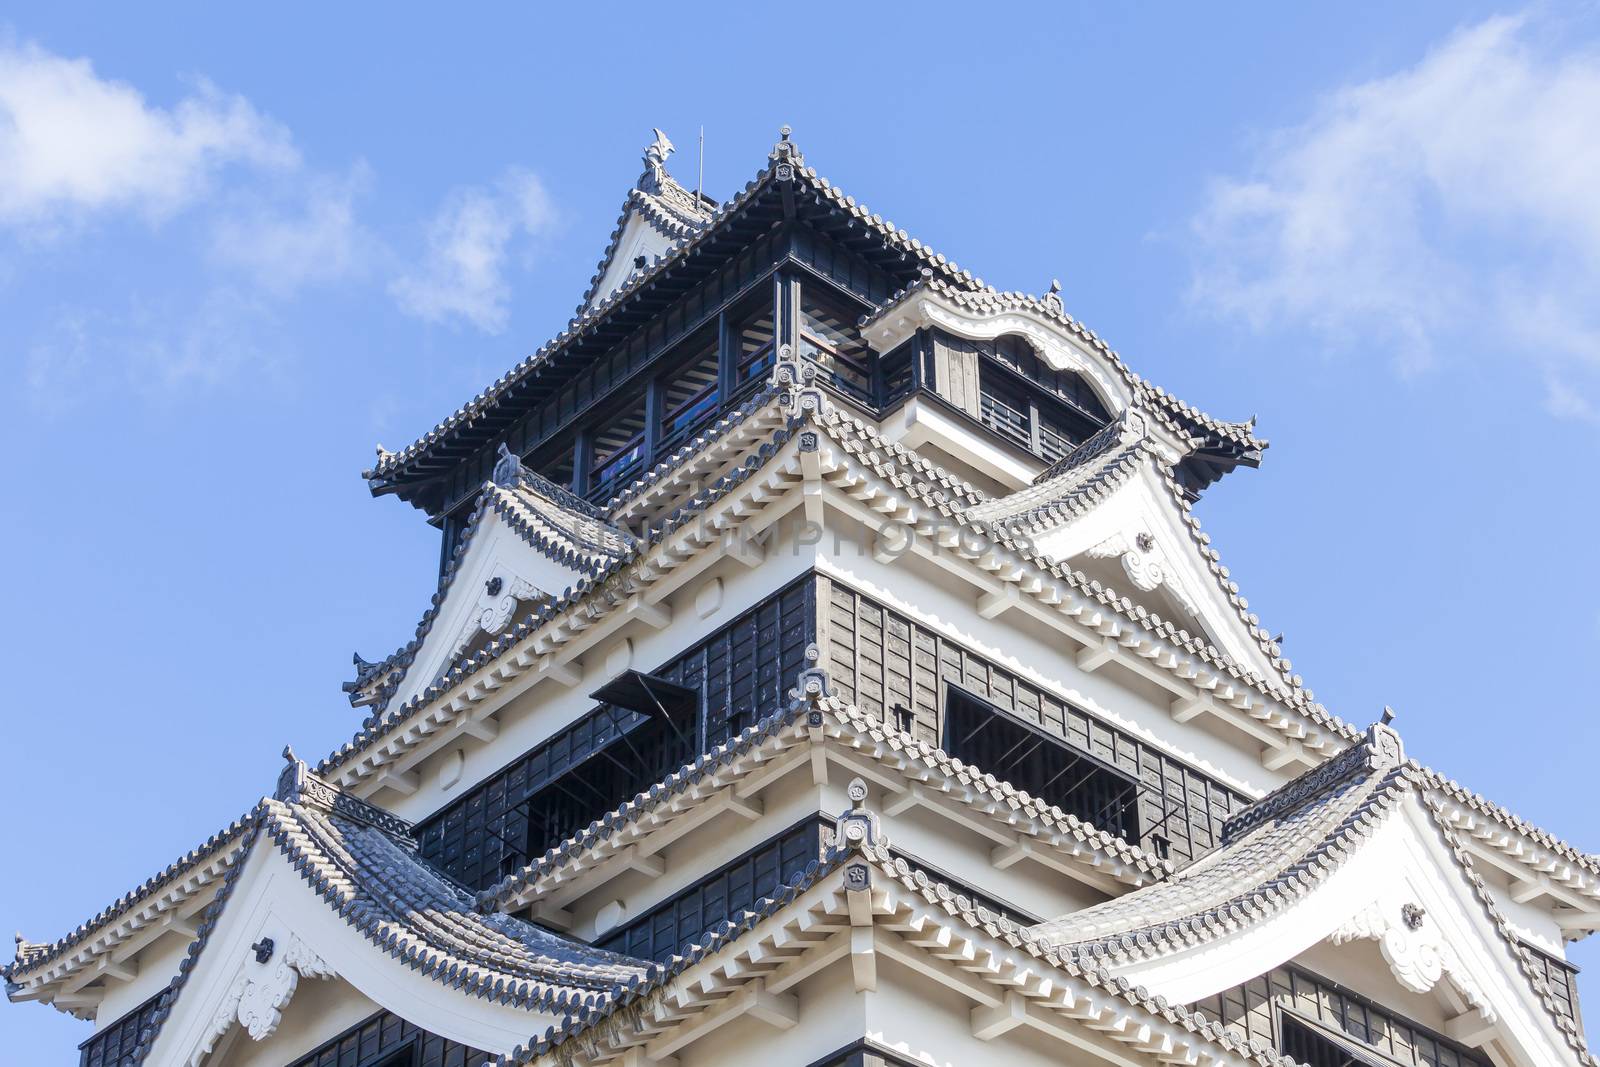 Ancient castle in Japan